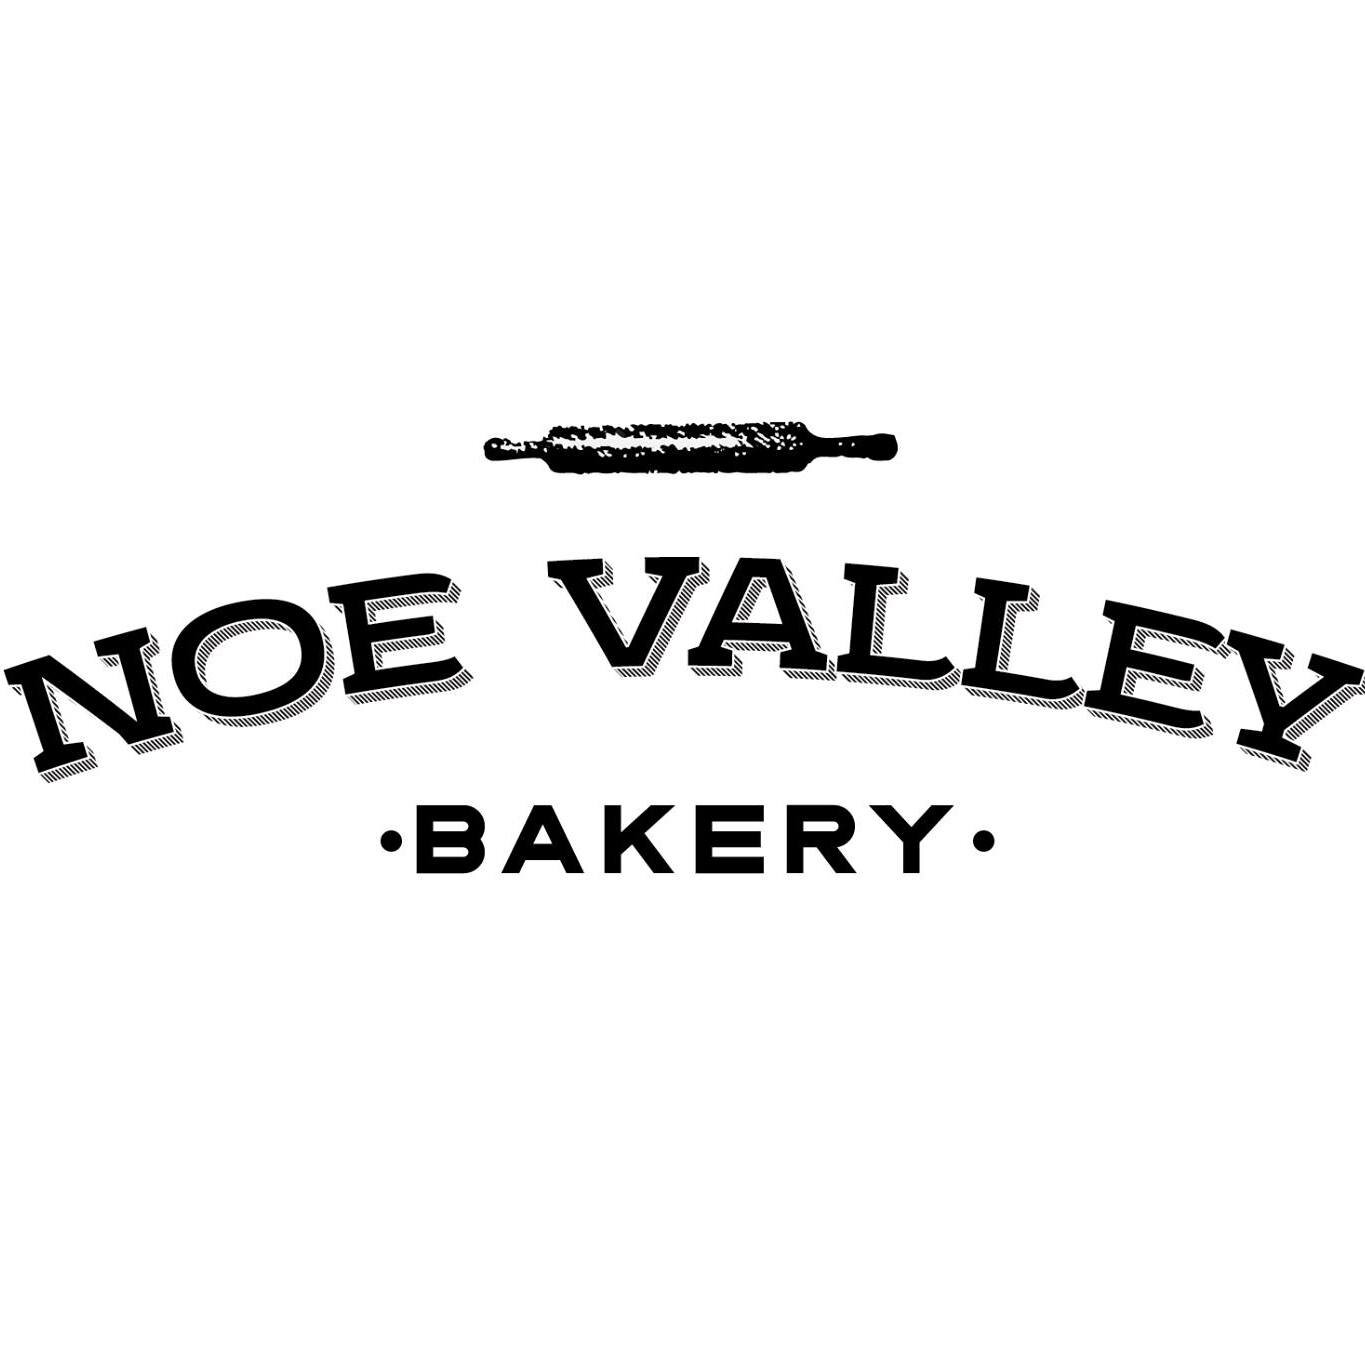 Noe Valley Bakery (Copy)